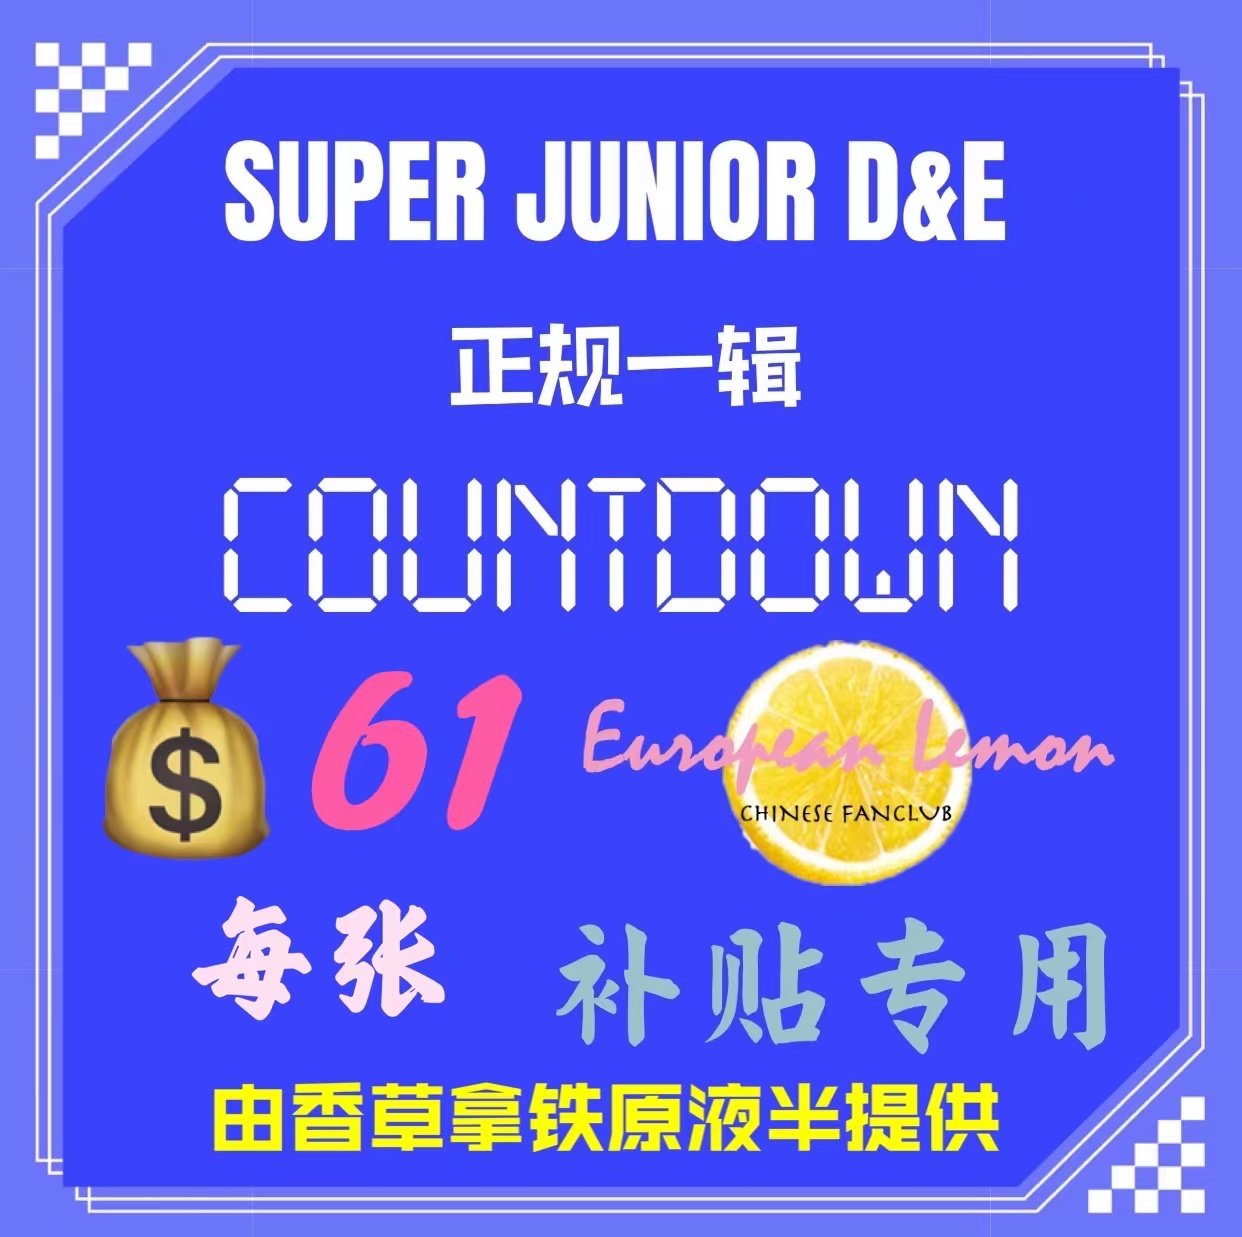 [全款 限量100张 补贴专] Super Junior : D&E - Album Vol.1 [COUNTDOWN] _欧柠 EuropeanLemon